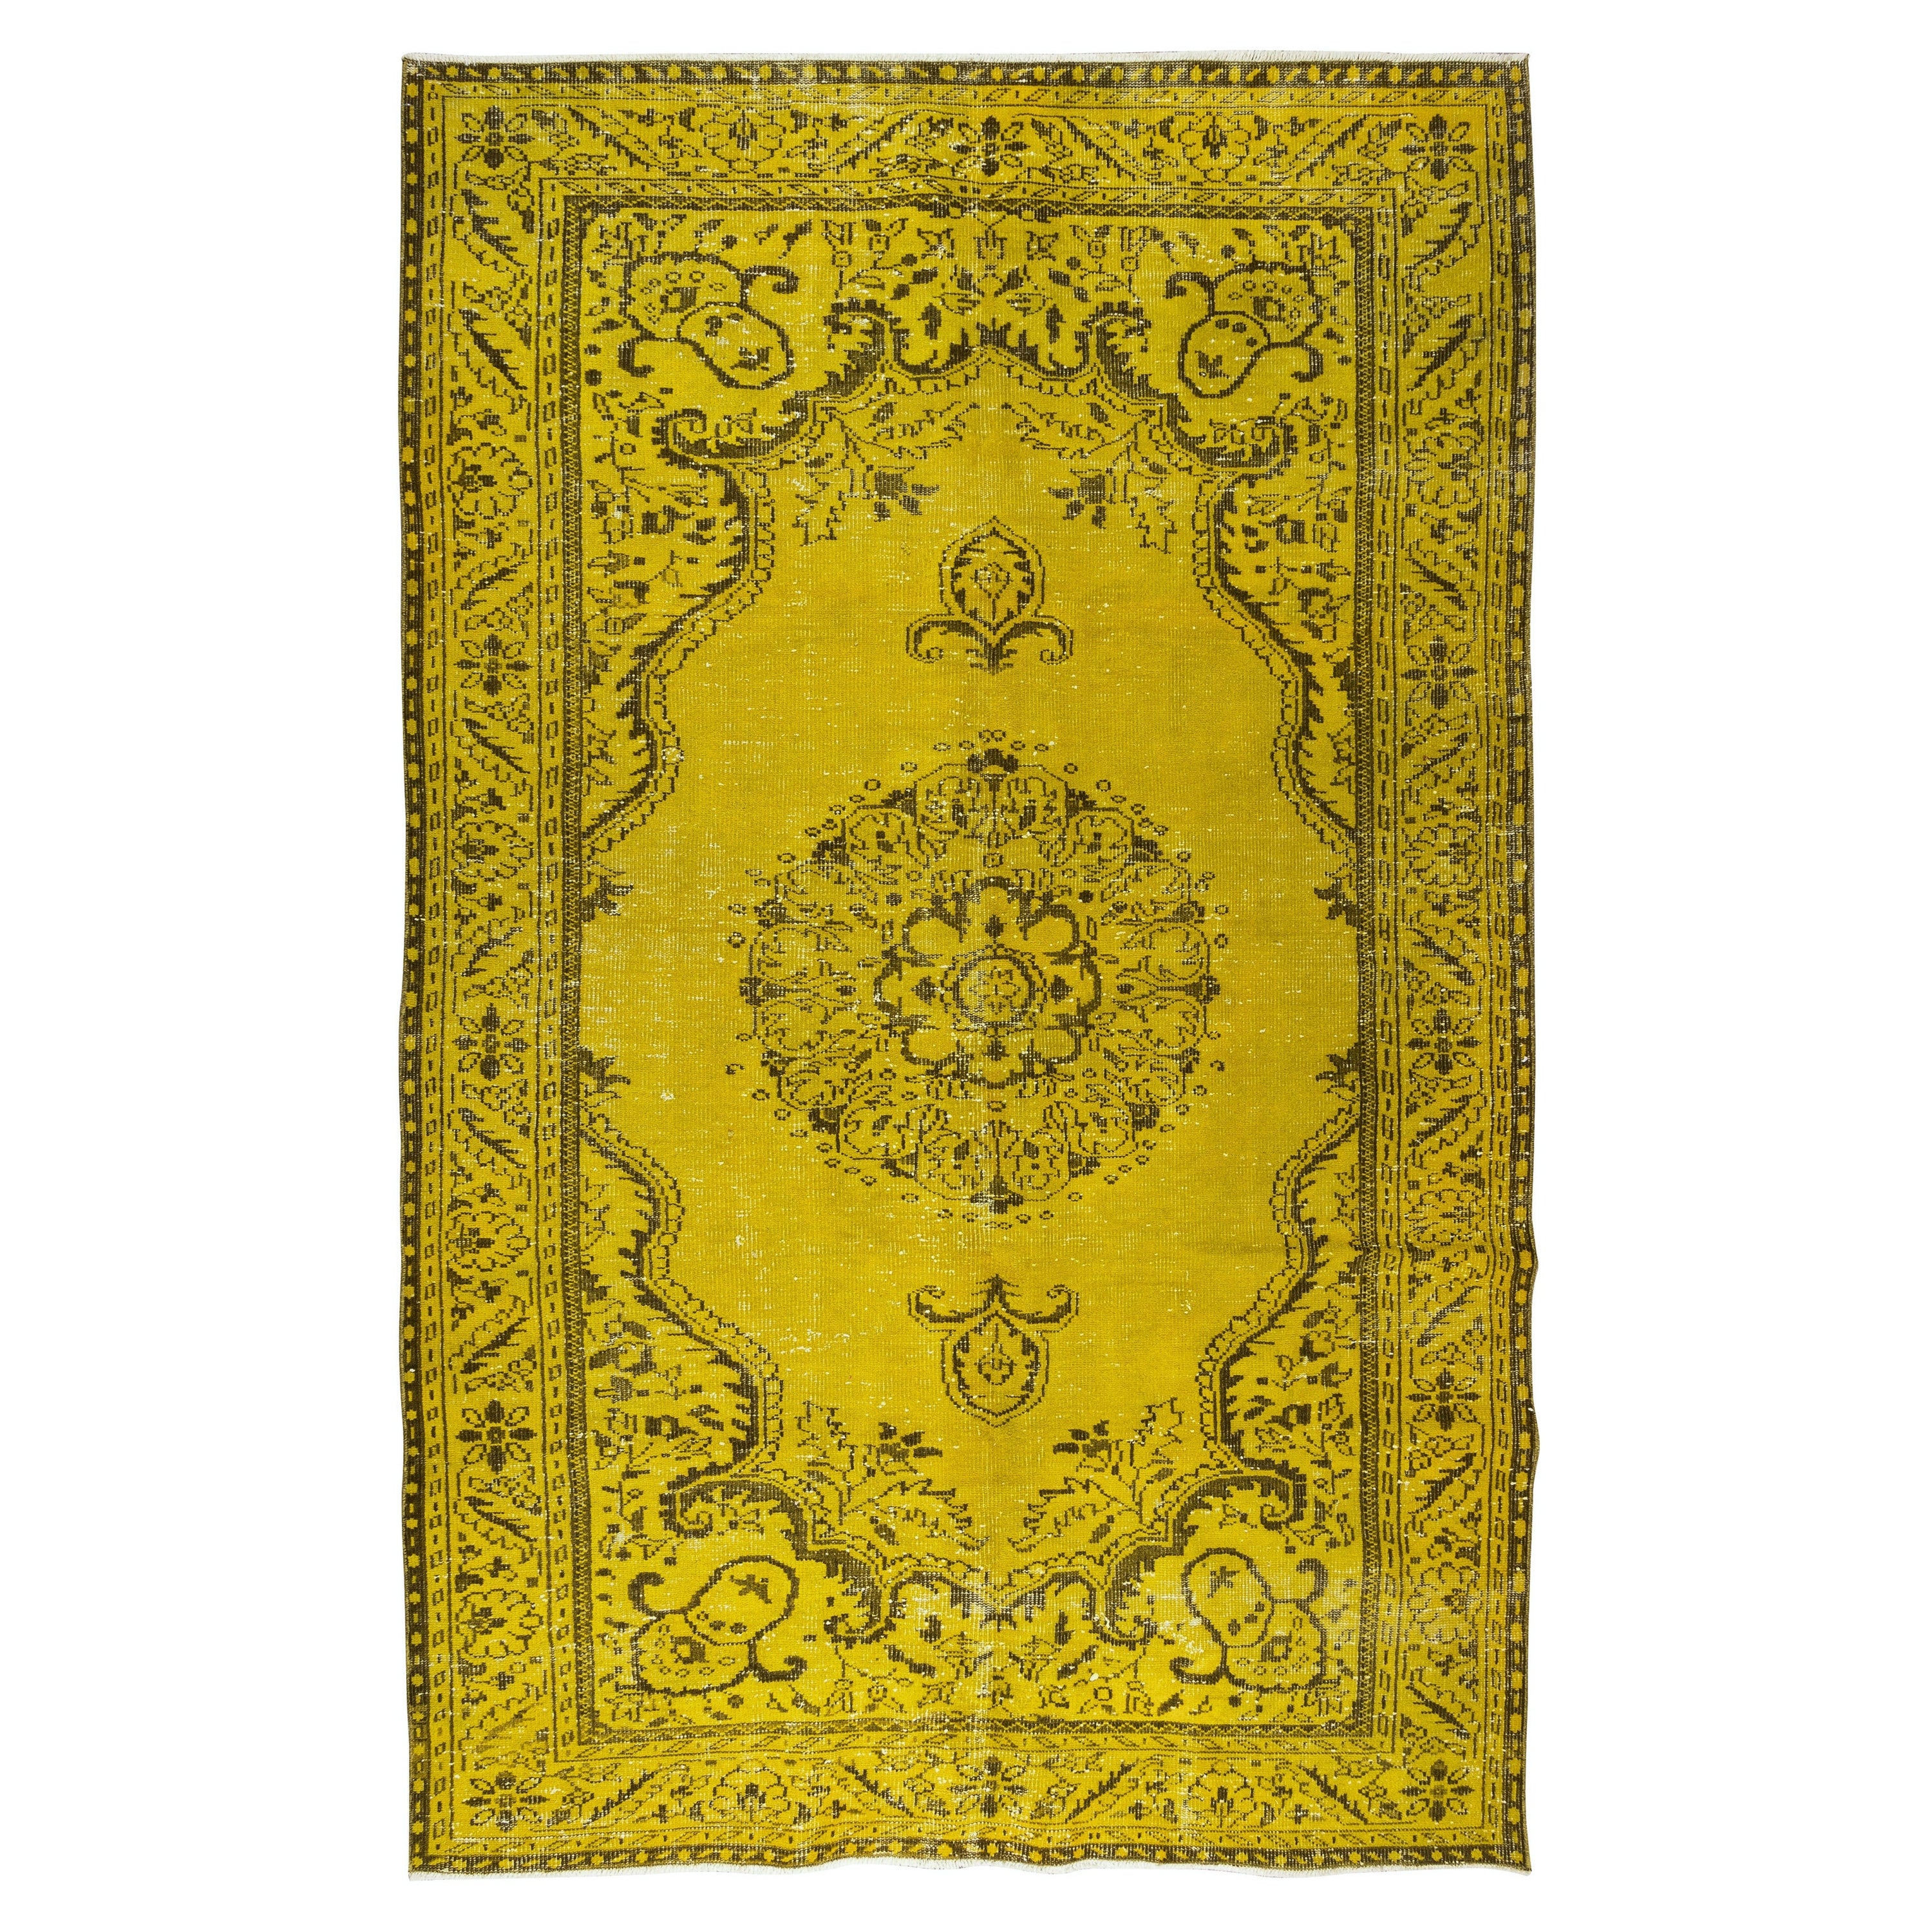 6.2x10.3 Ft Yellow Area Rug. Handmade Turkish Vintage Carpet, Modern Home Decor For Sale